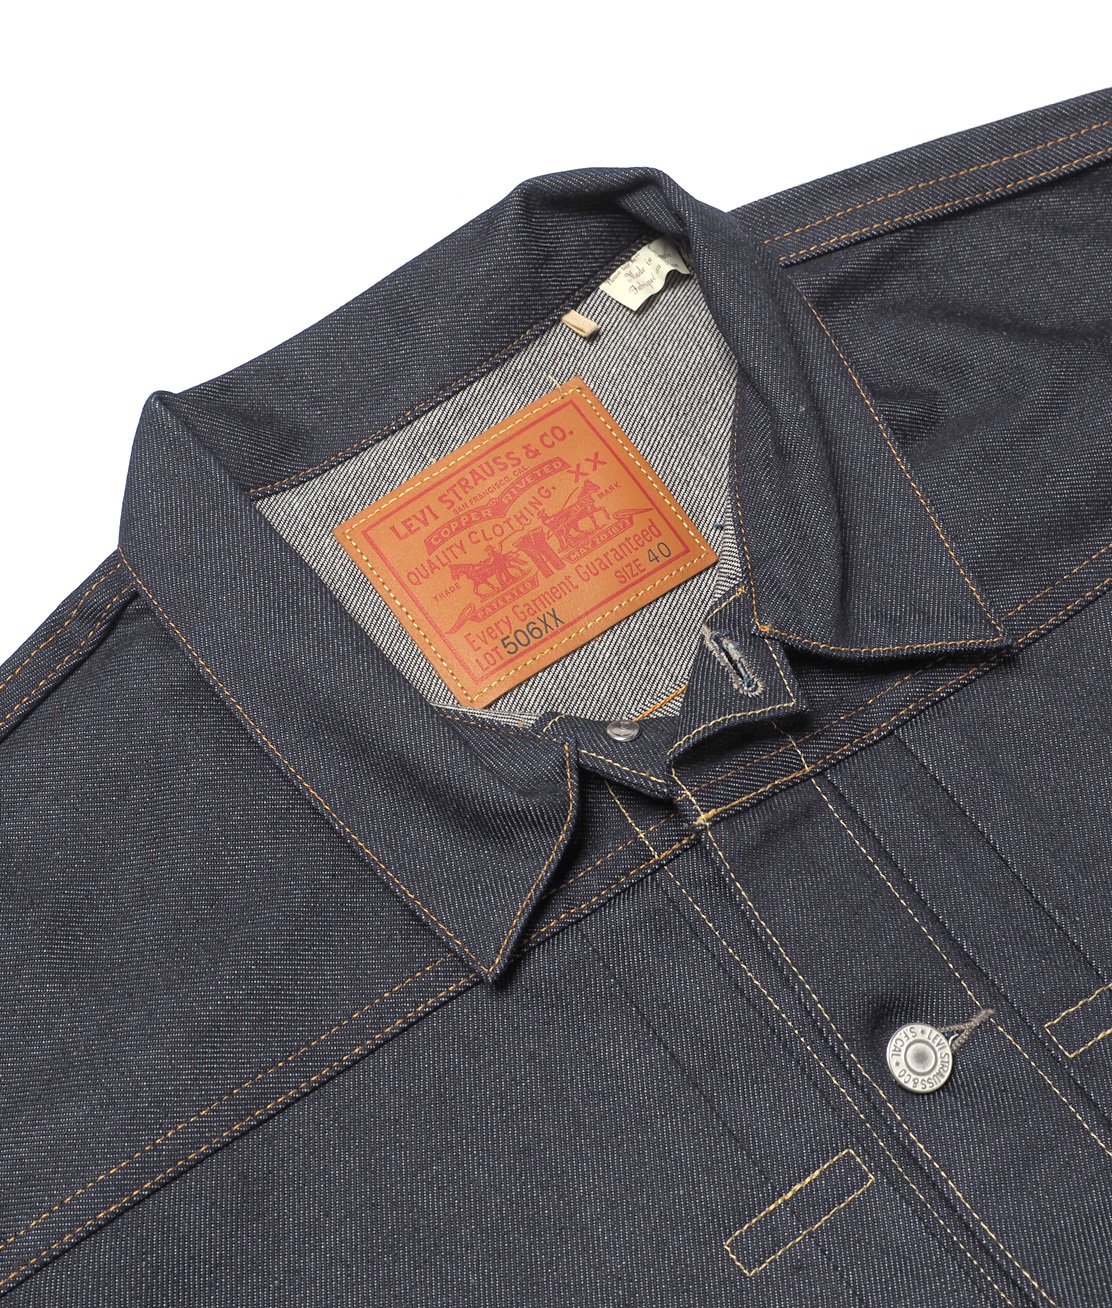 LEVI'S VINTAGE CLOTHING】1936 TYPE I TRUCKER JACKET - RIGID 506XX